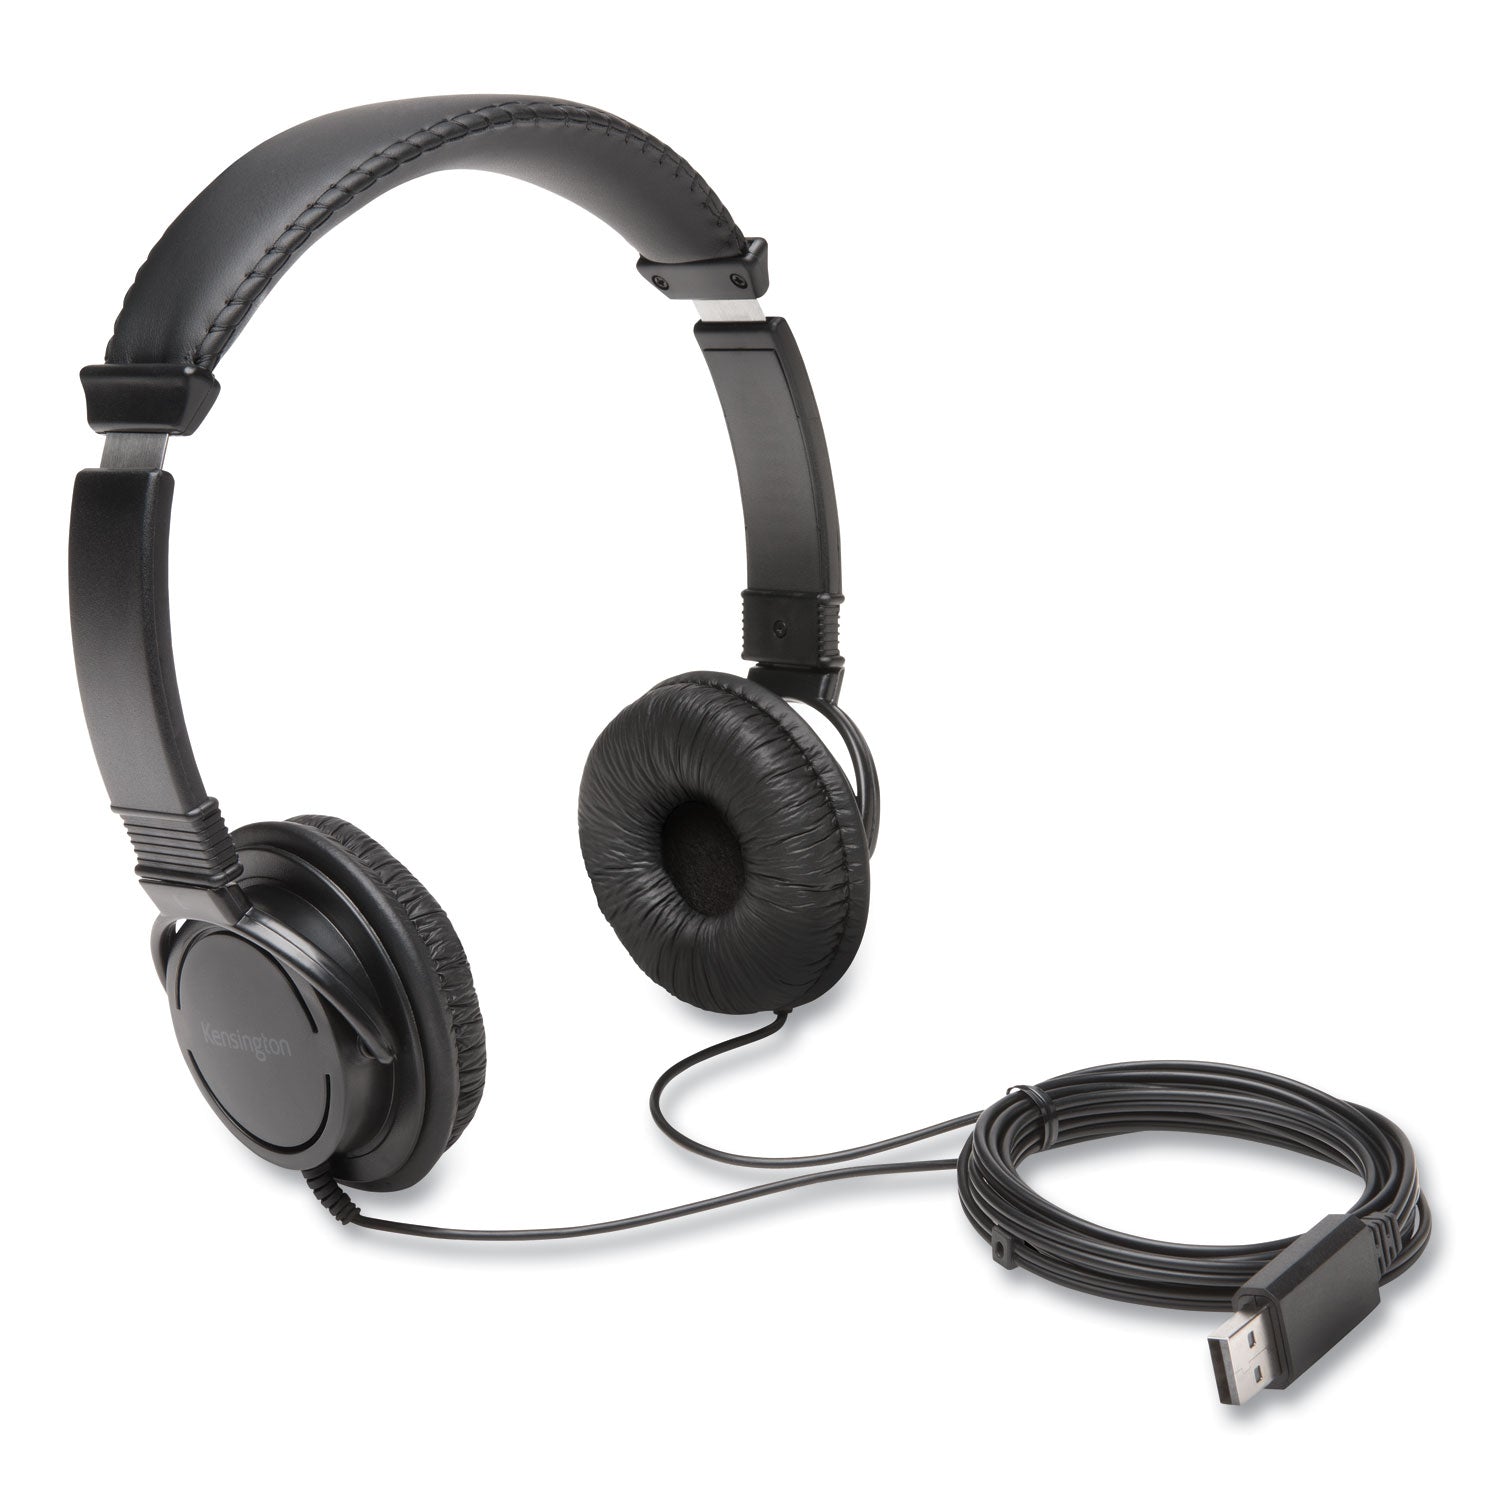 hi-fi-headphones-6-ft-cord-black_kmwk97600ww - 1